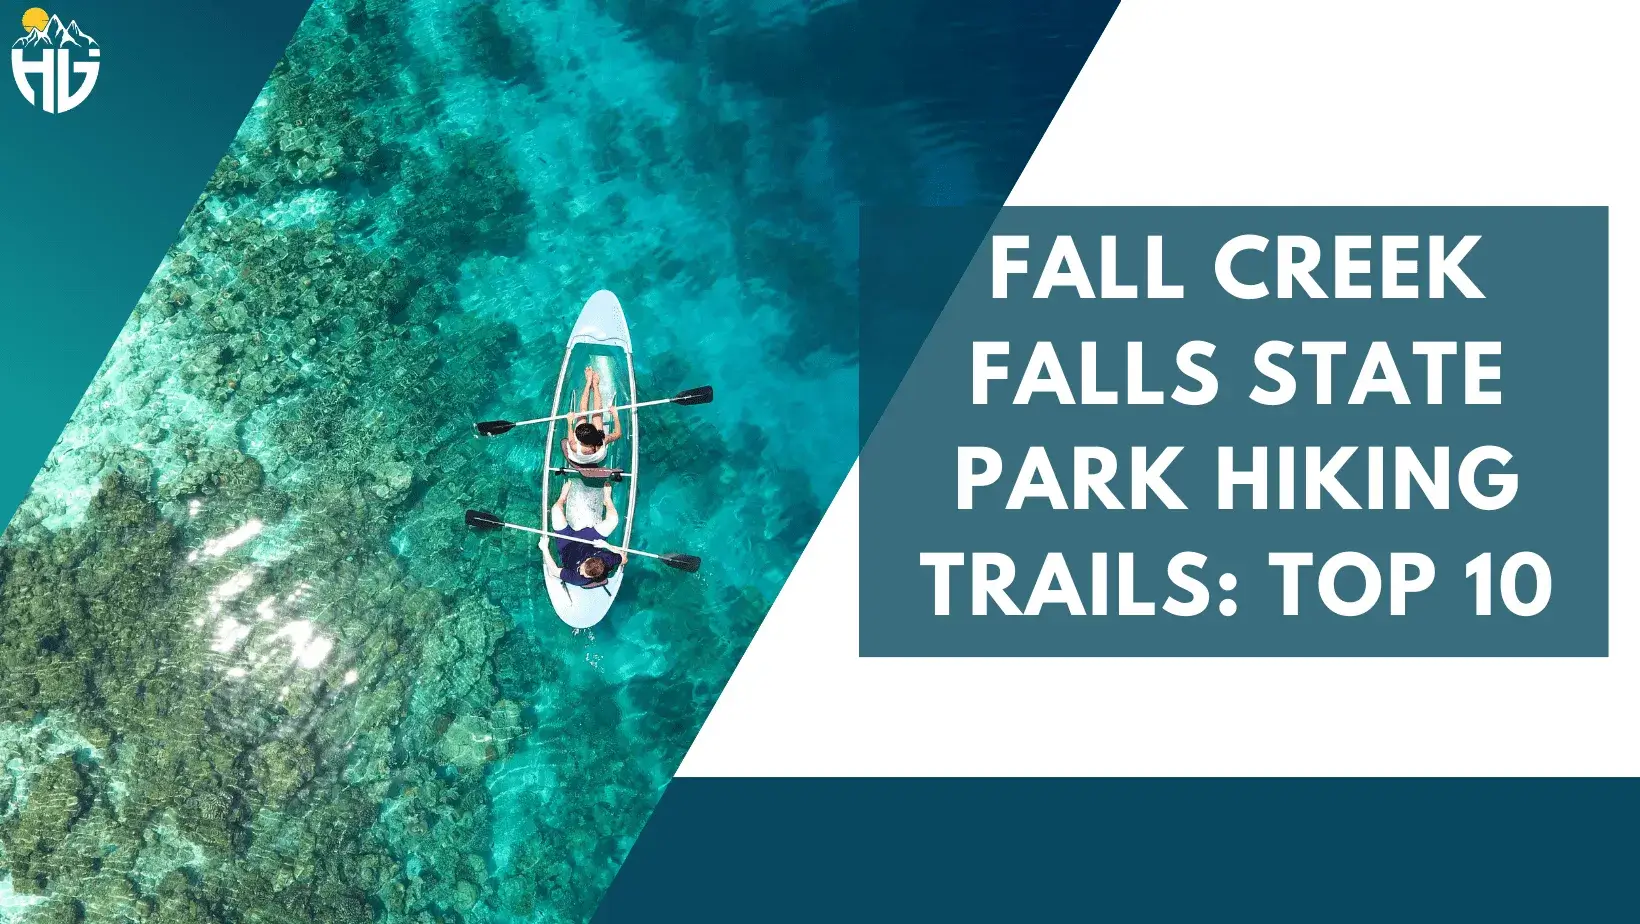 Fall Creek Falls State Park Hiking Trails: Top 10